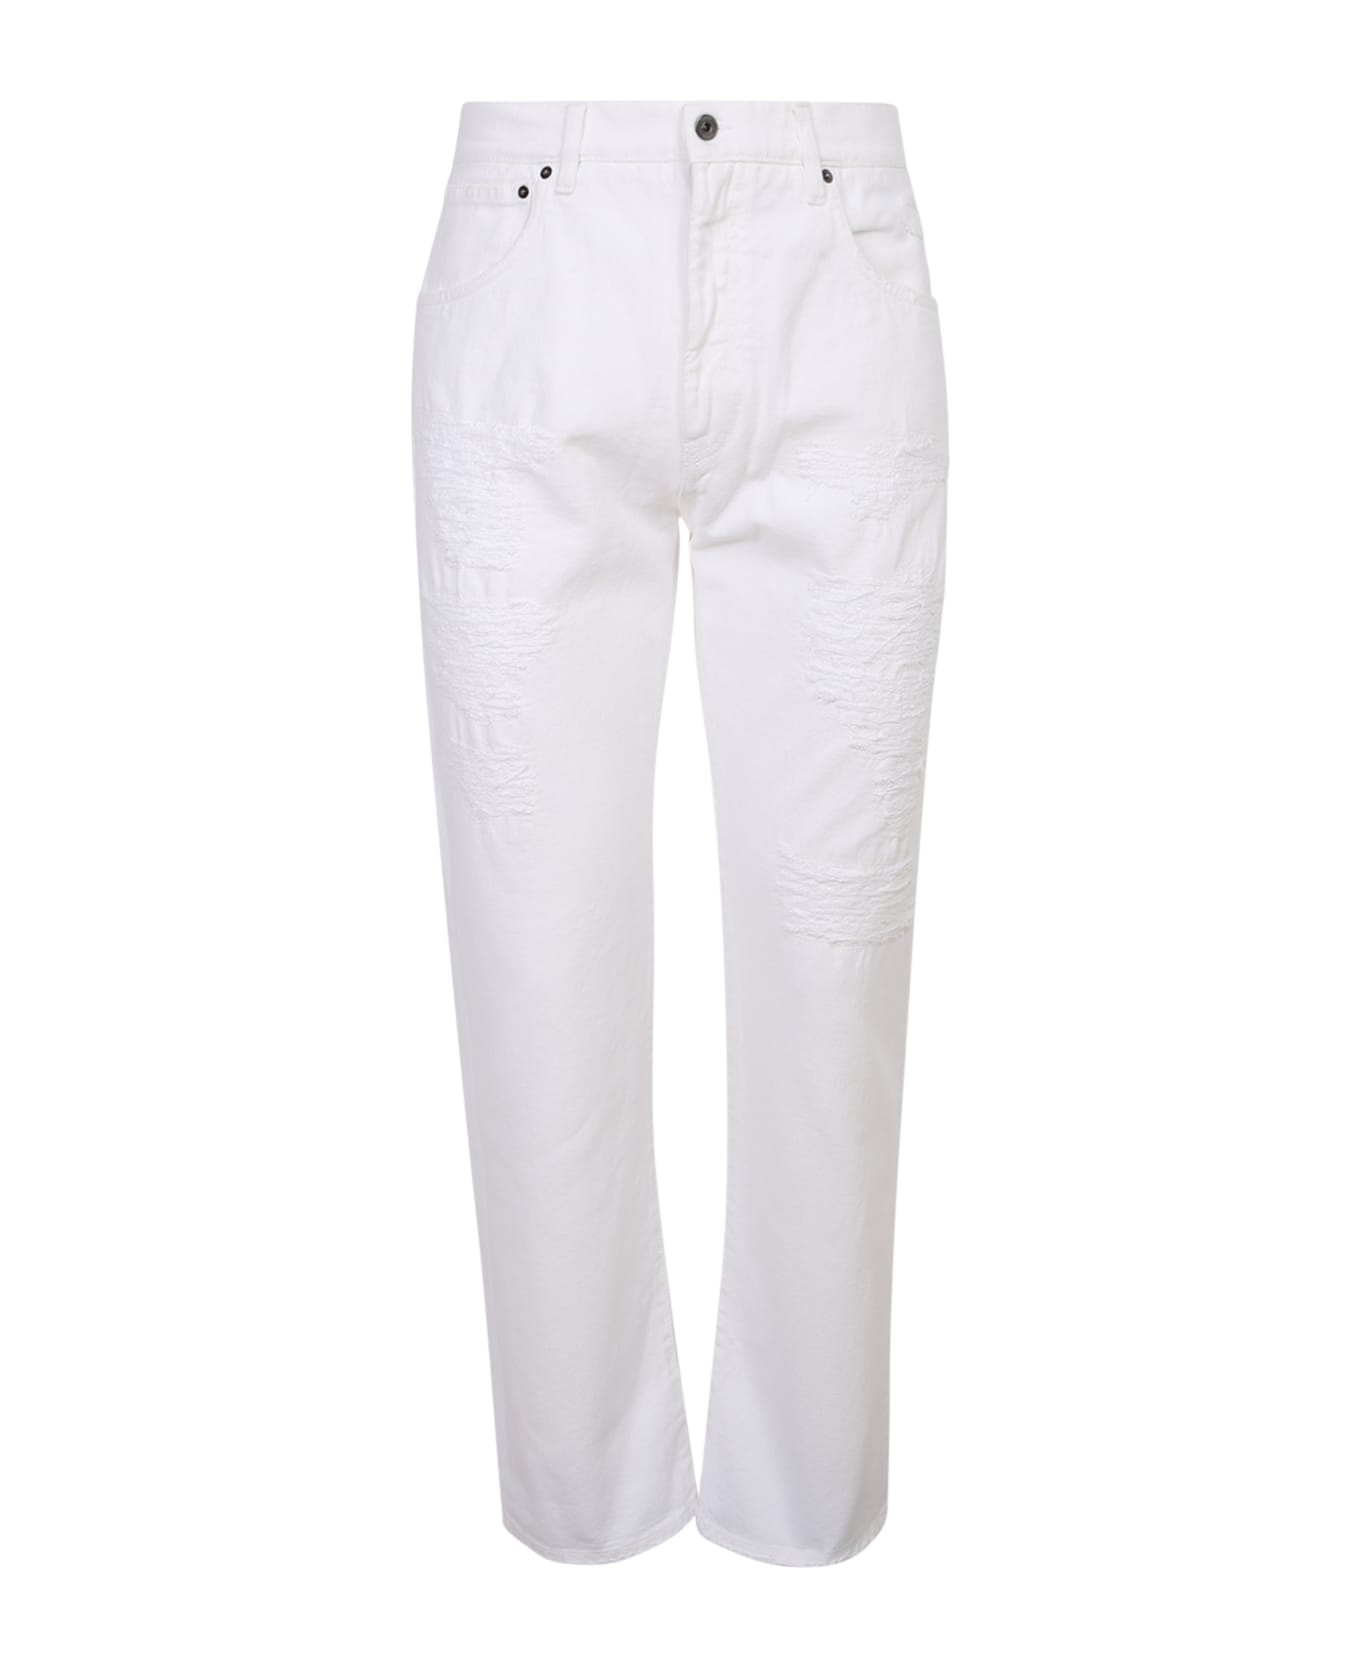 14 Bros Cheswick Straight Jeans - White ボトムス